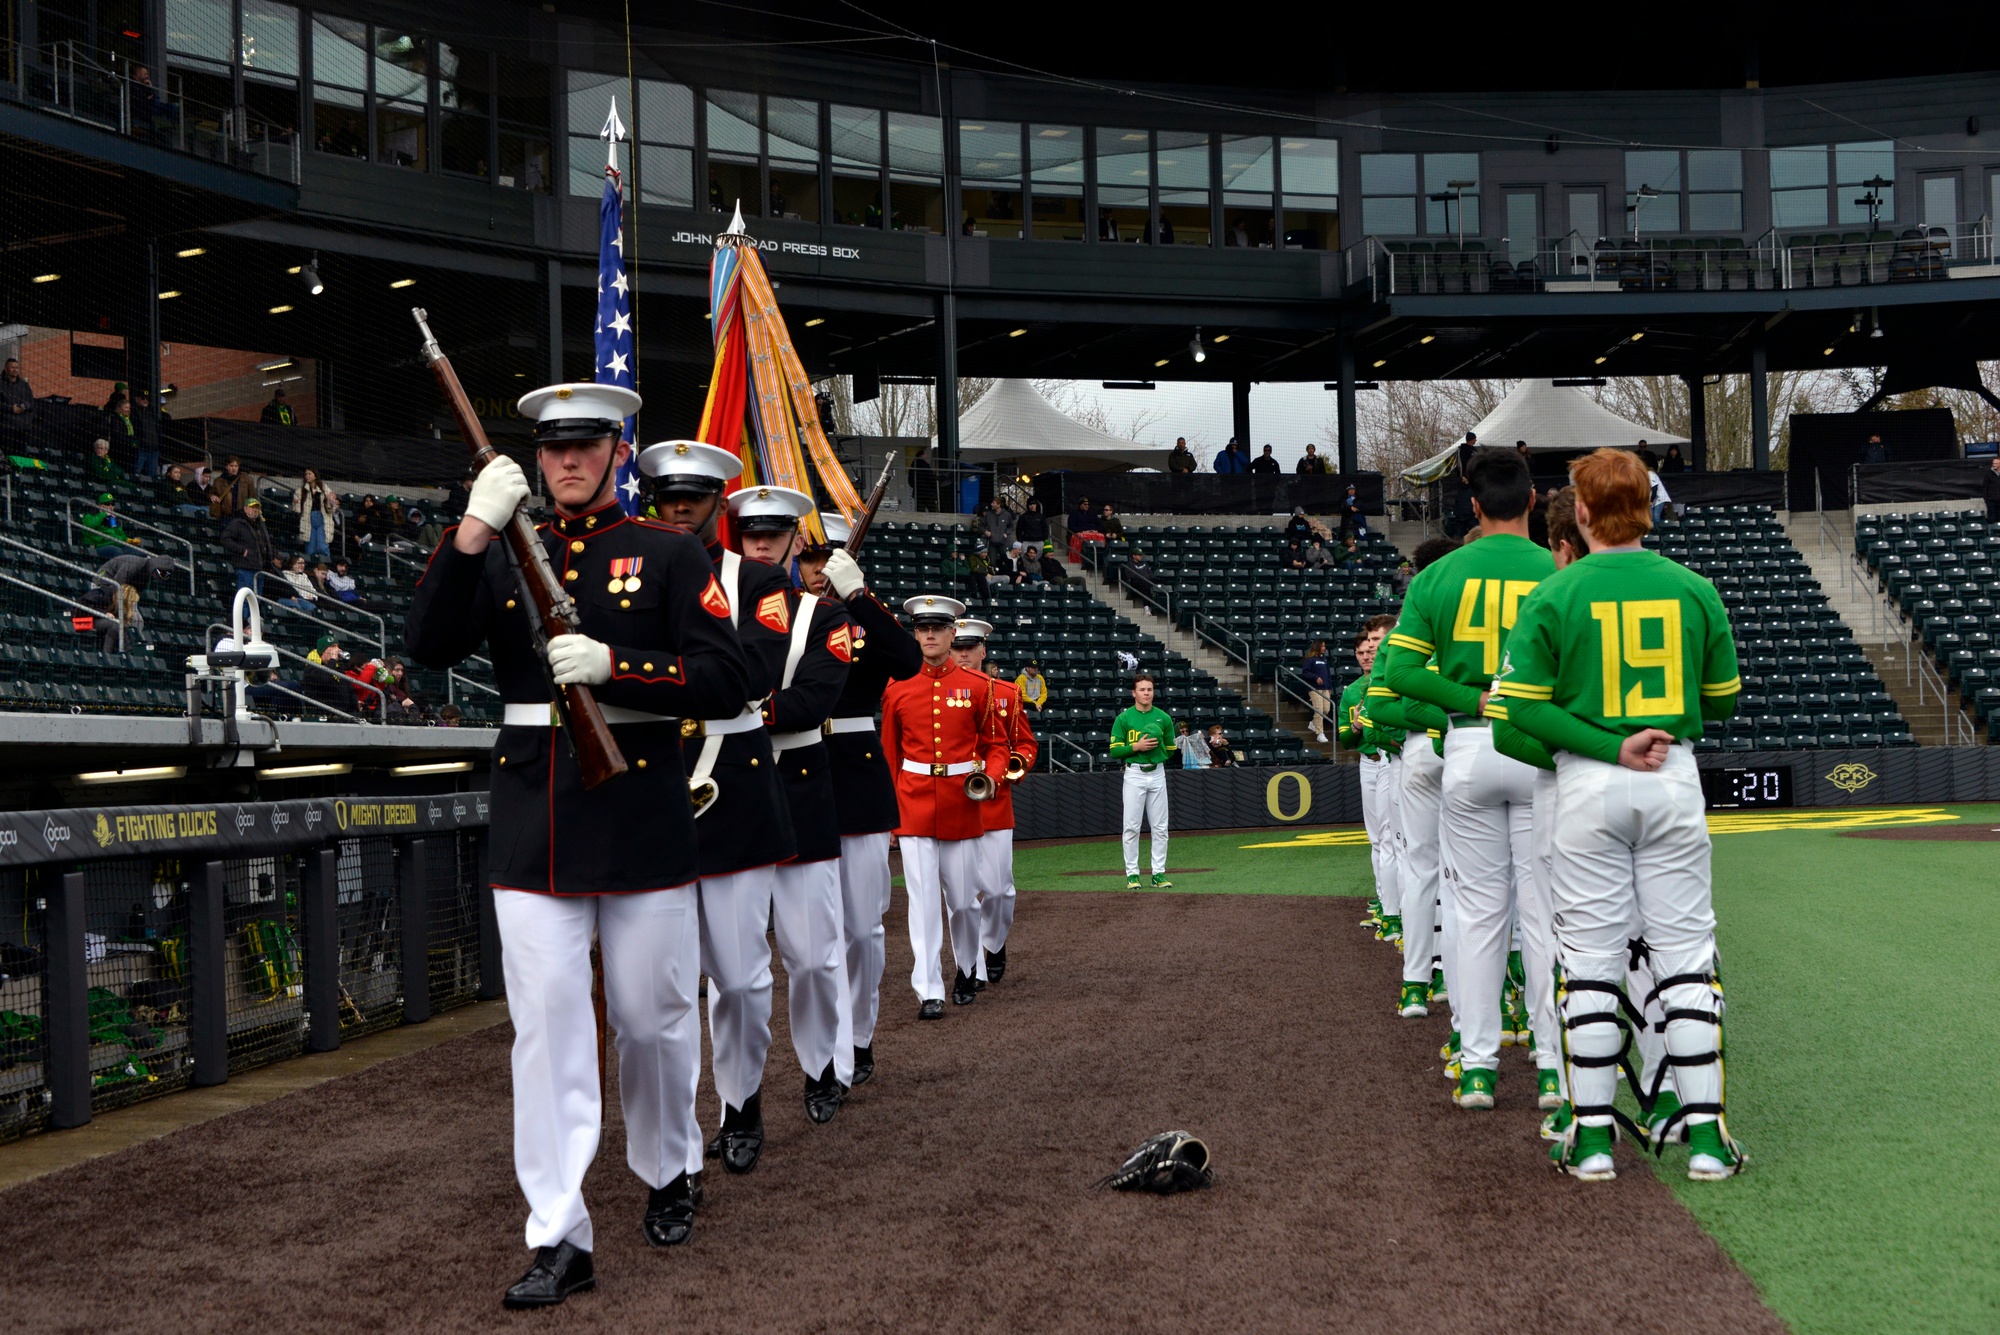 DVIDS - Images - Marines Perform at University of Oregon Baseball